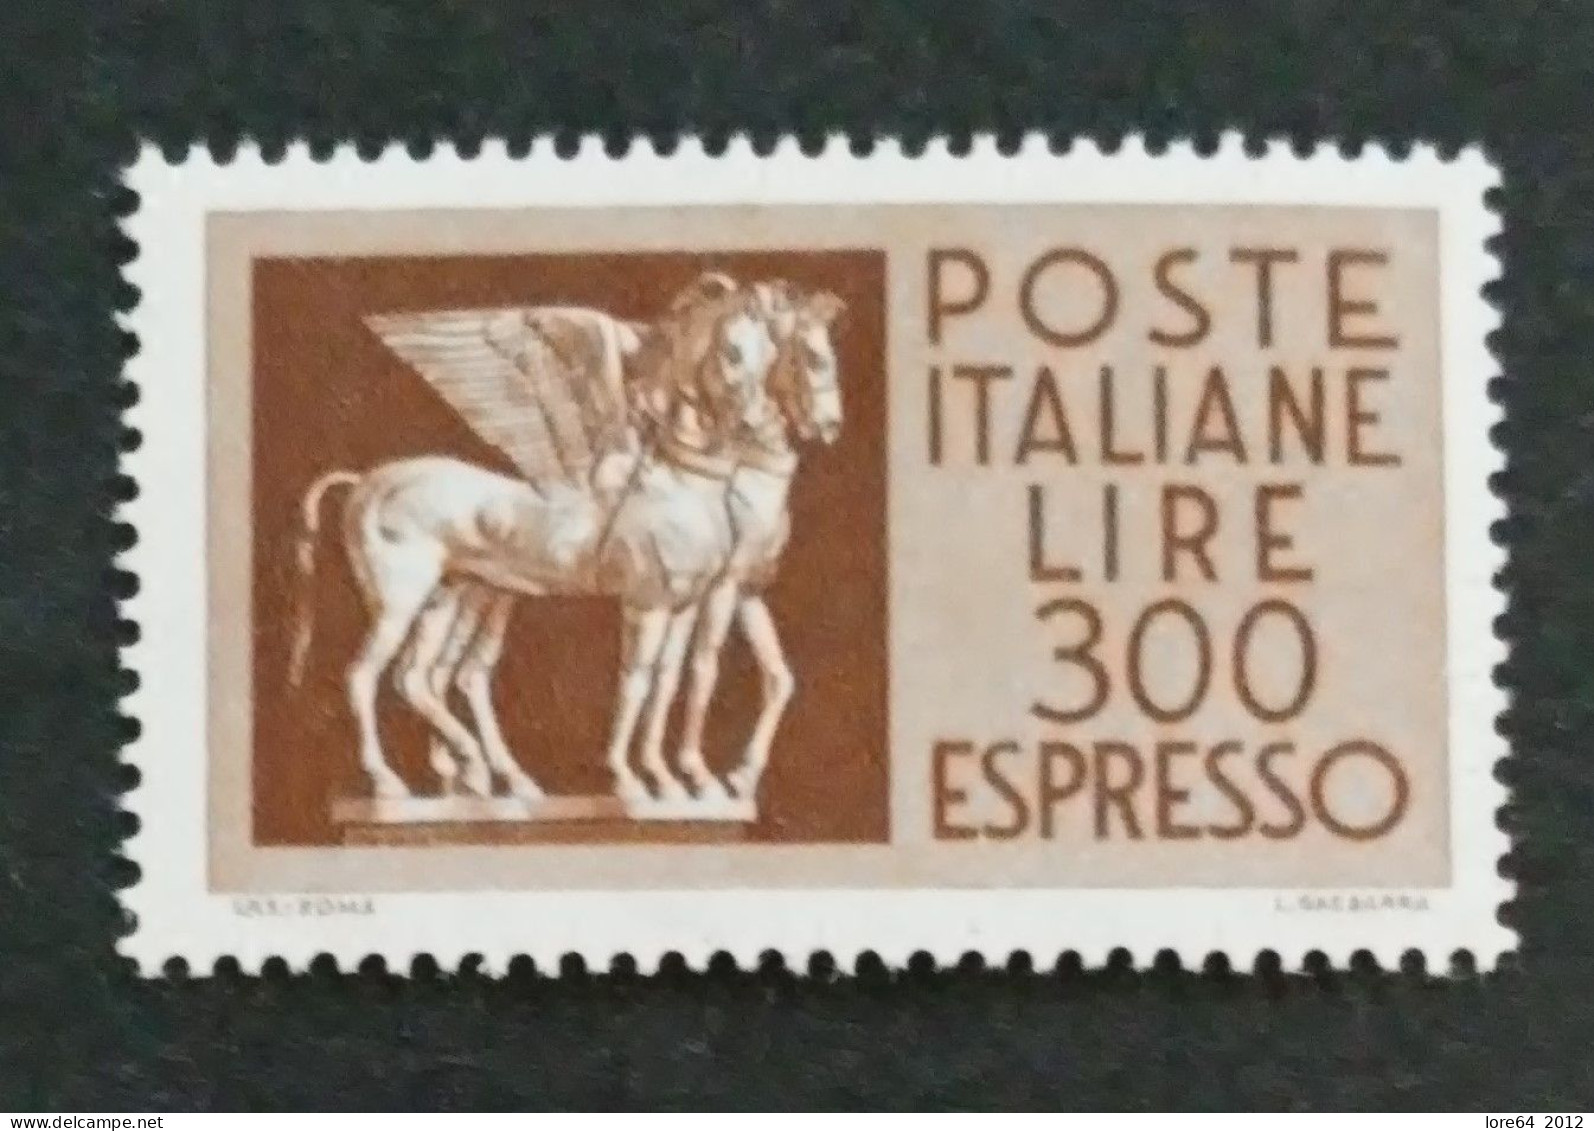 ITALIA 1976 - N° Catalogo Unificato ES 38 Nuovo** - Express/pneumatic Mail